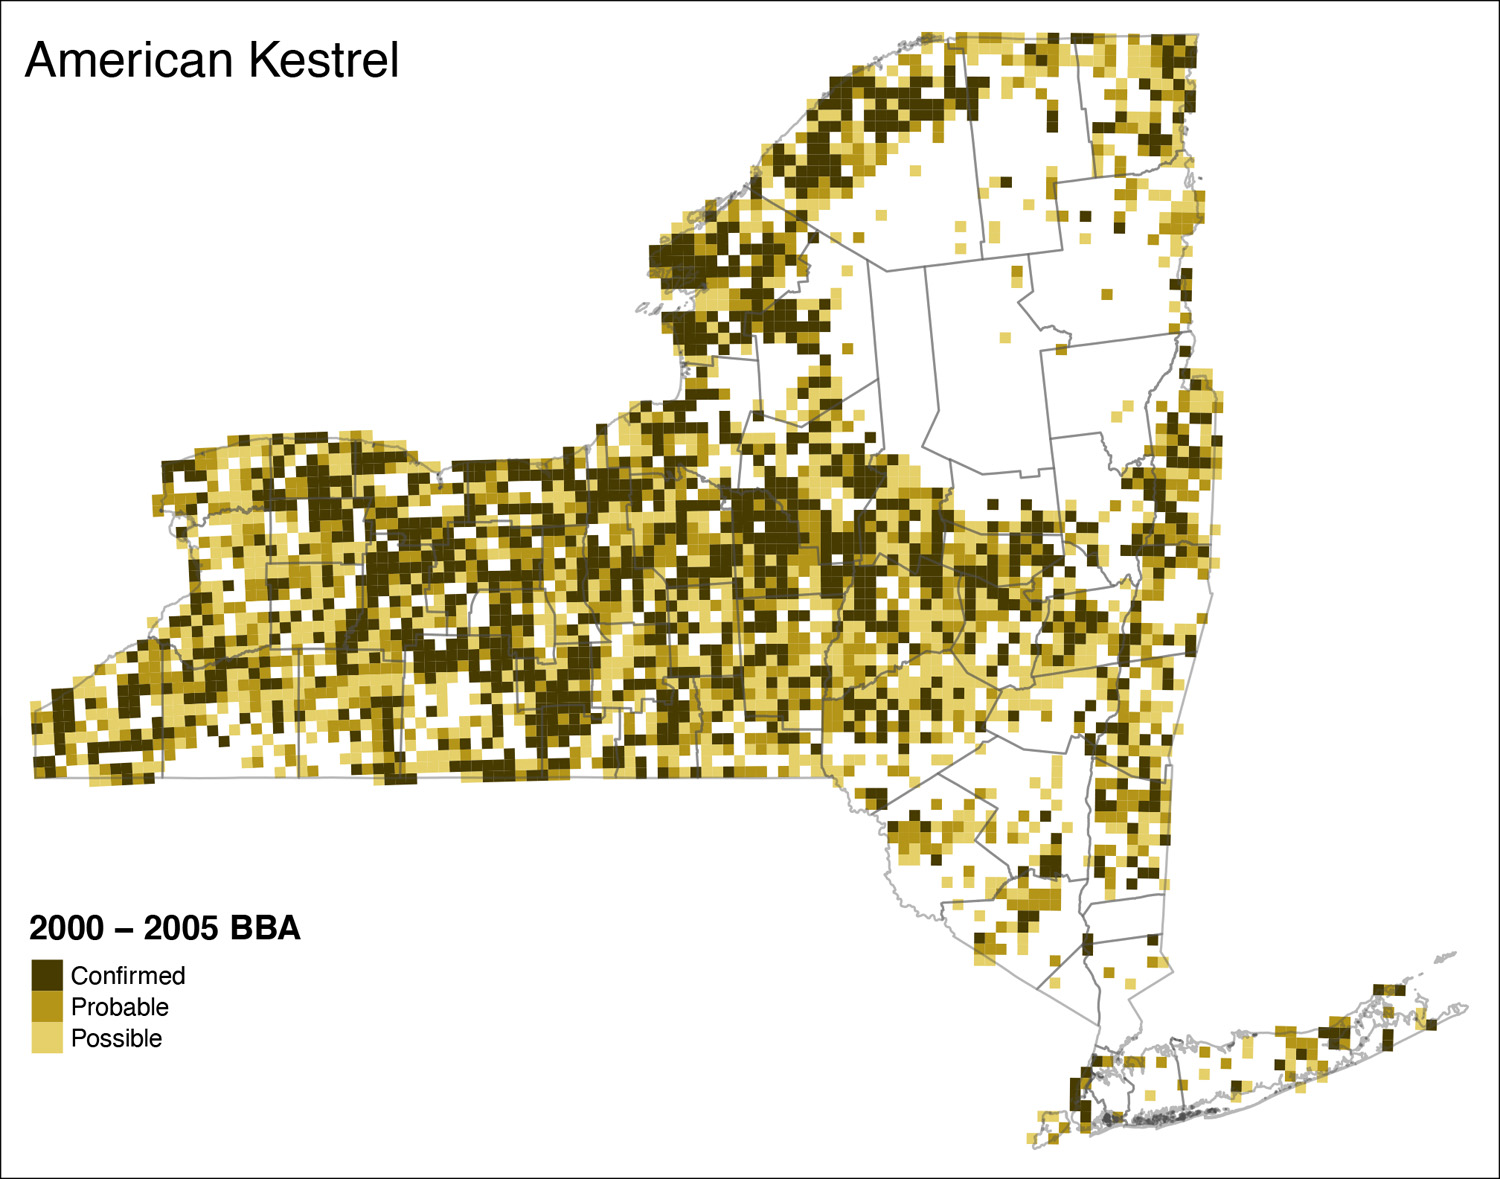 American Kestrel Atlas 2 Distribution